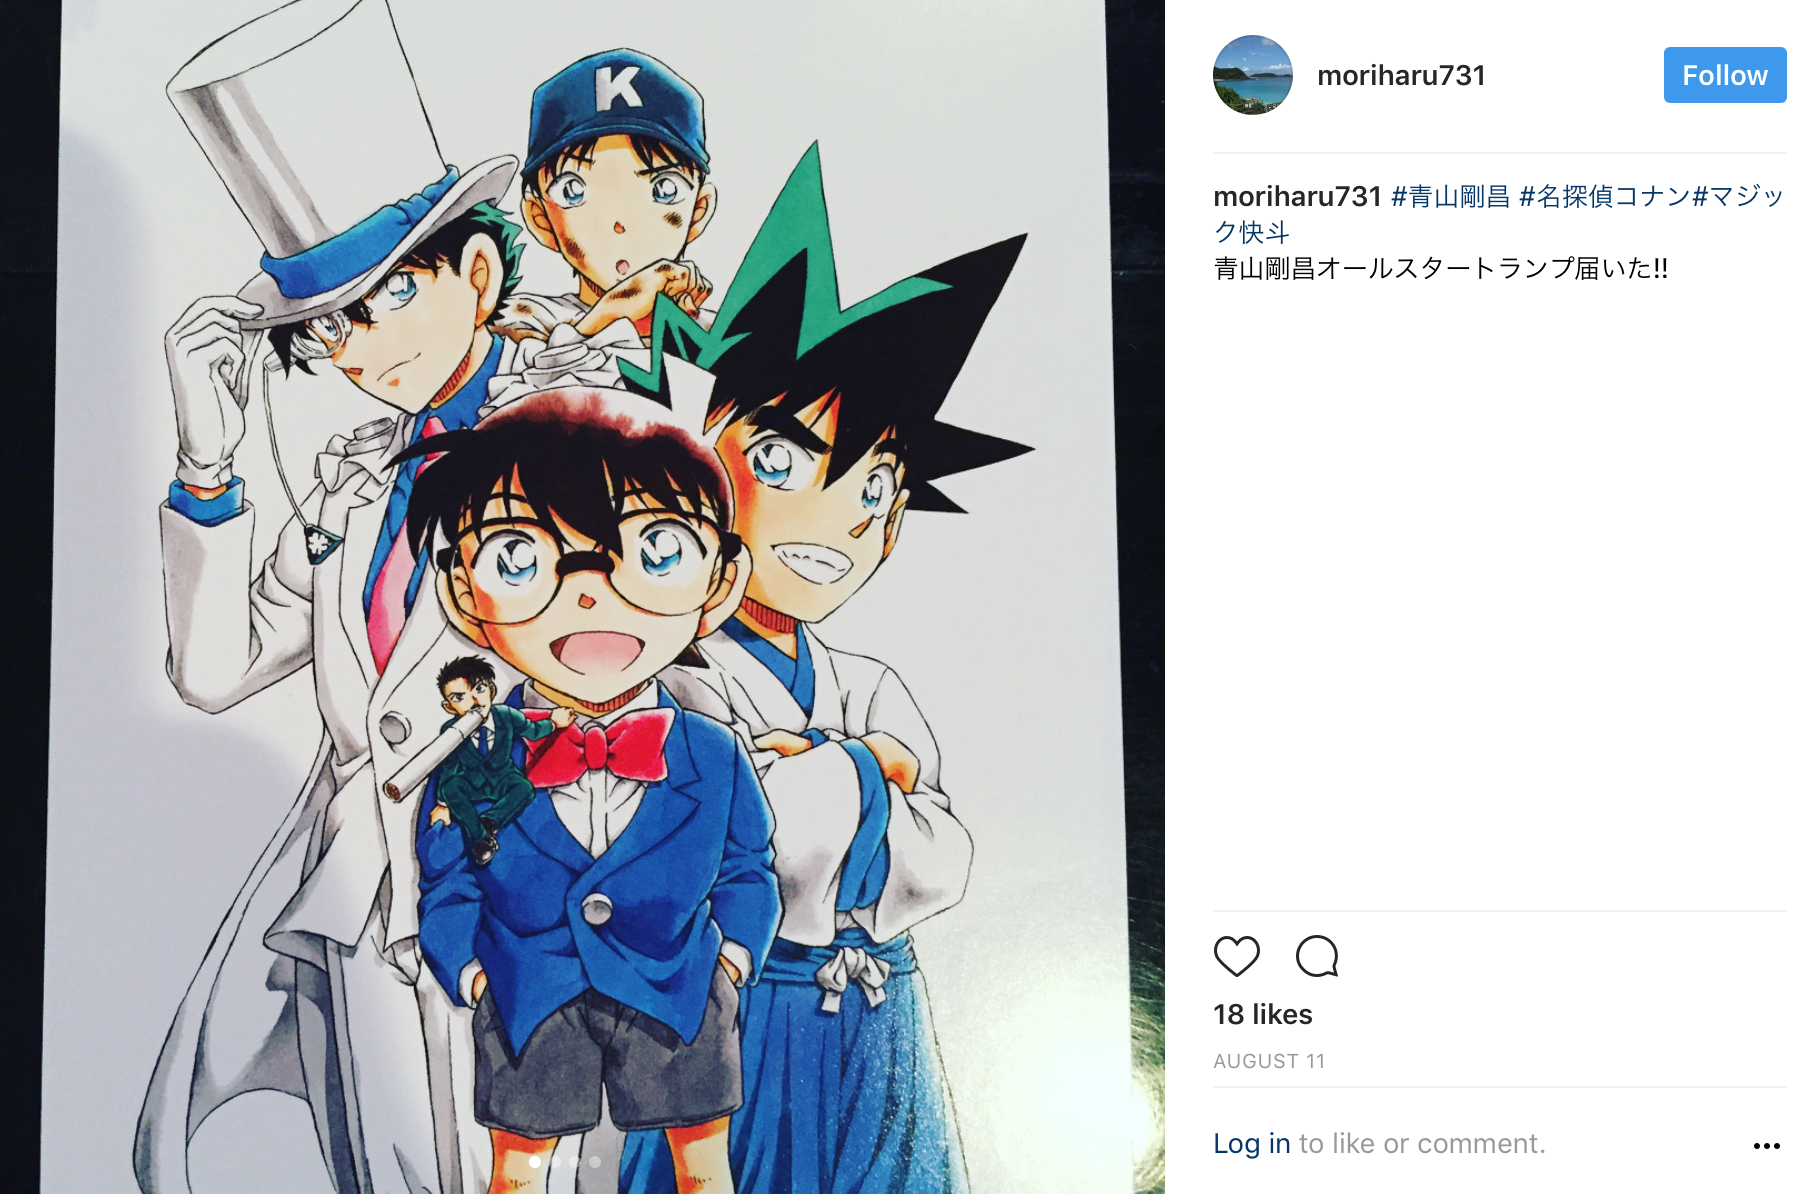 Detective Conan Manga Creator Works Hours Per Day 5 Days Per Week Soranews24 Japan News